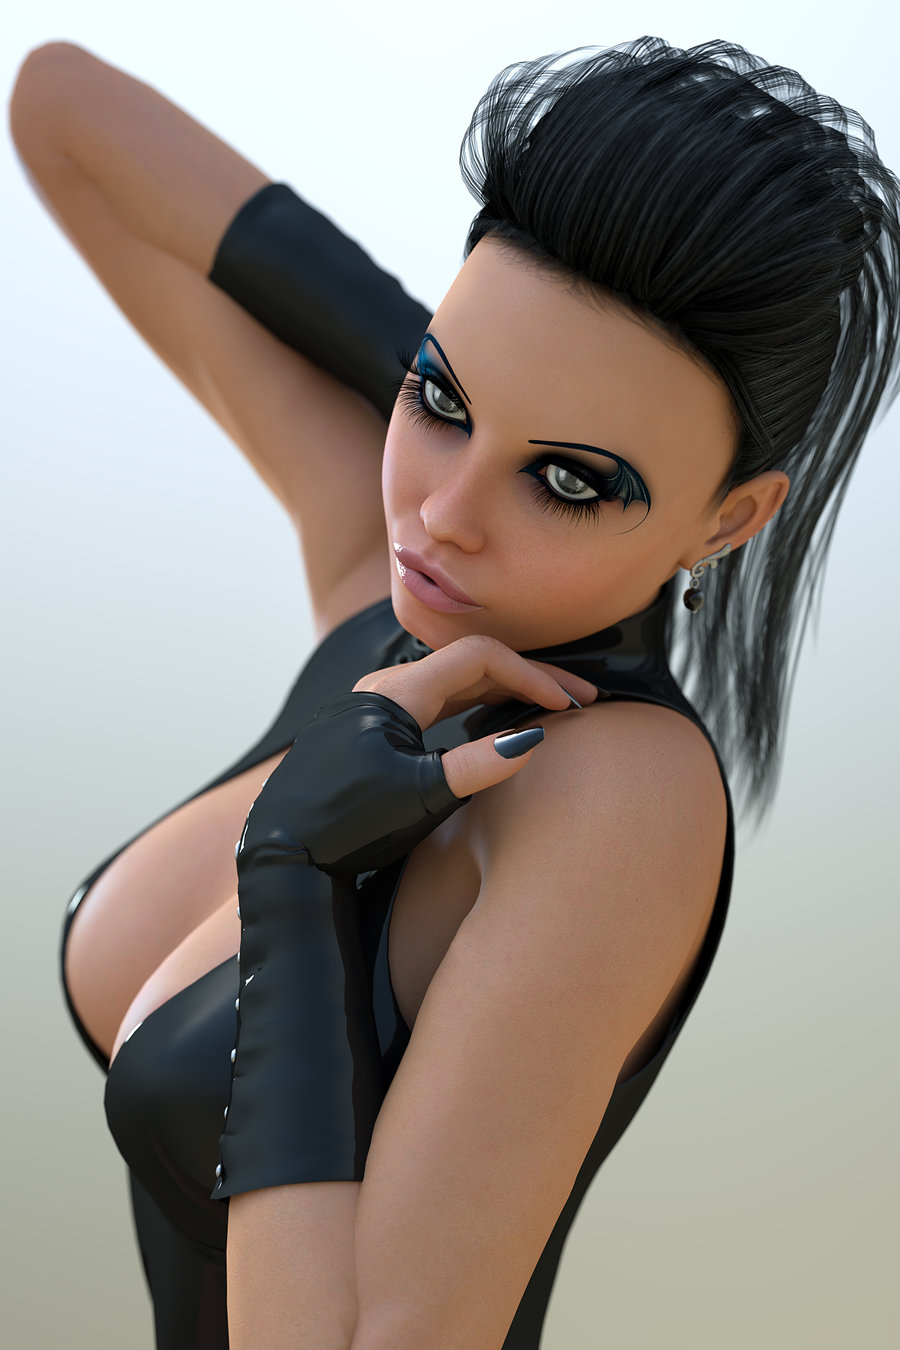 General 900x1350 RGUS CGI women dark hair makeup painted nails cleavage black clothing gloves simple background